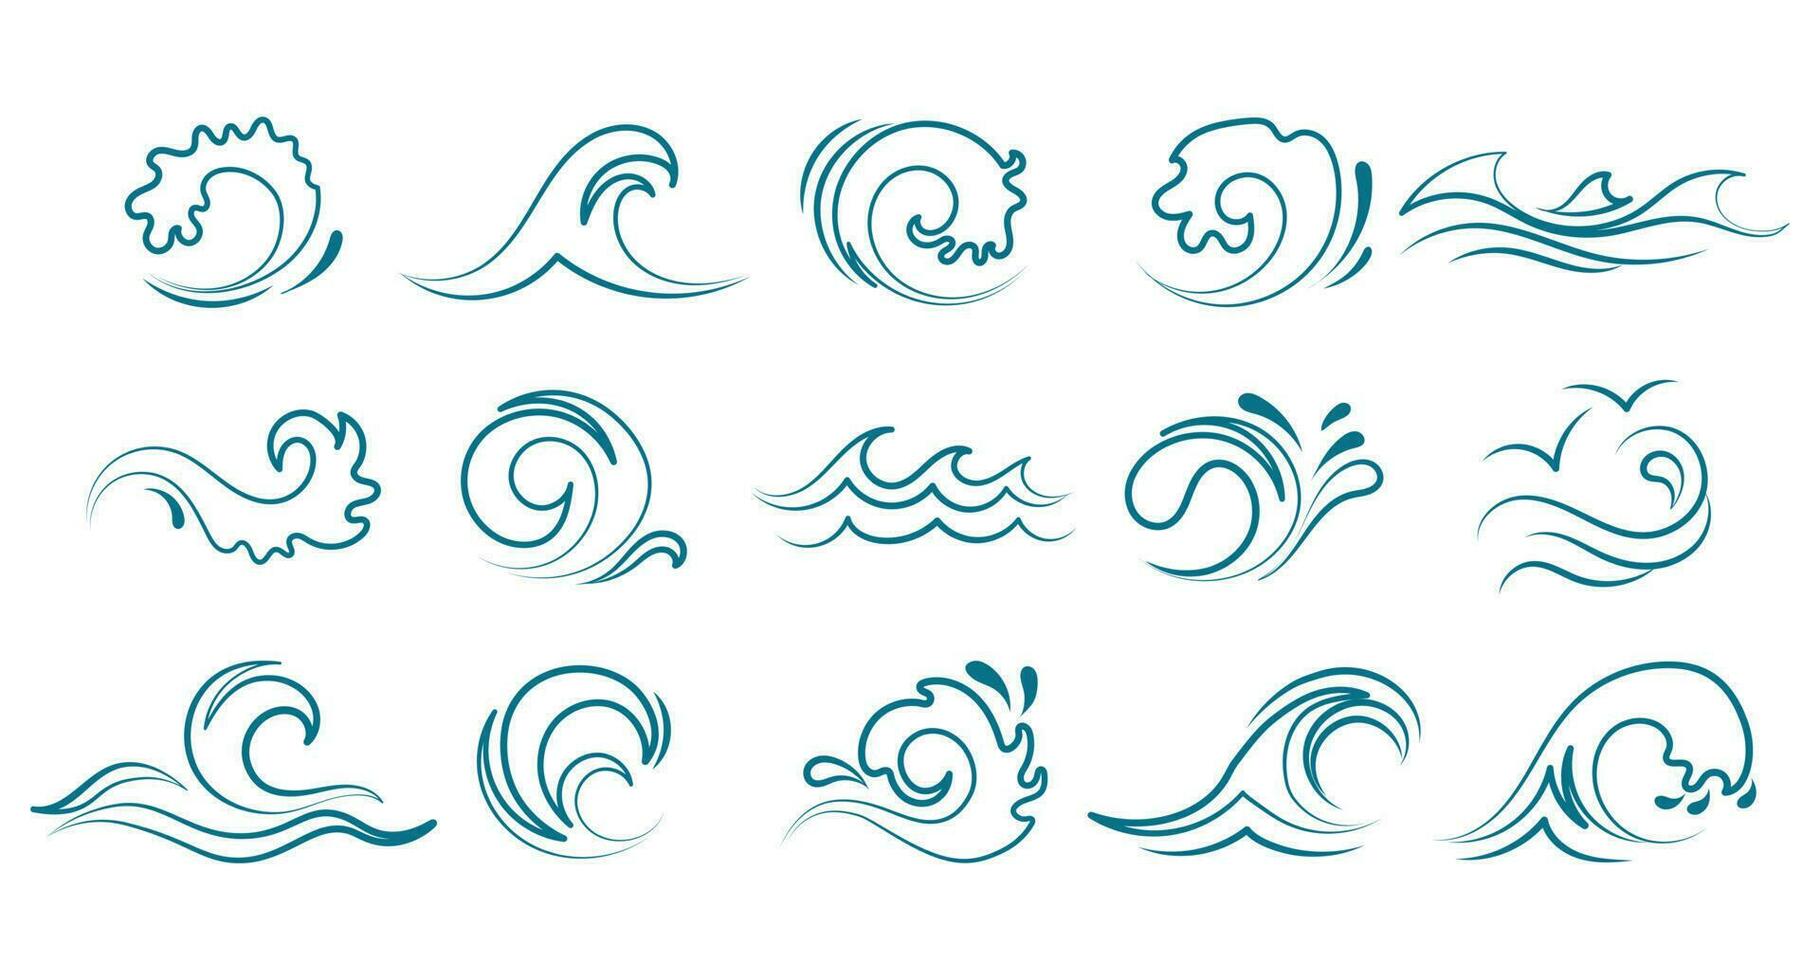 Blau Ozean Meer Wellen Satz. Linie Symbole, Logos, Vektor